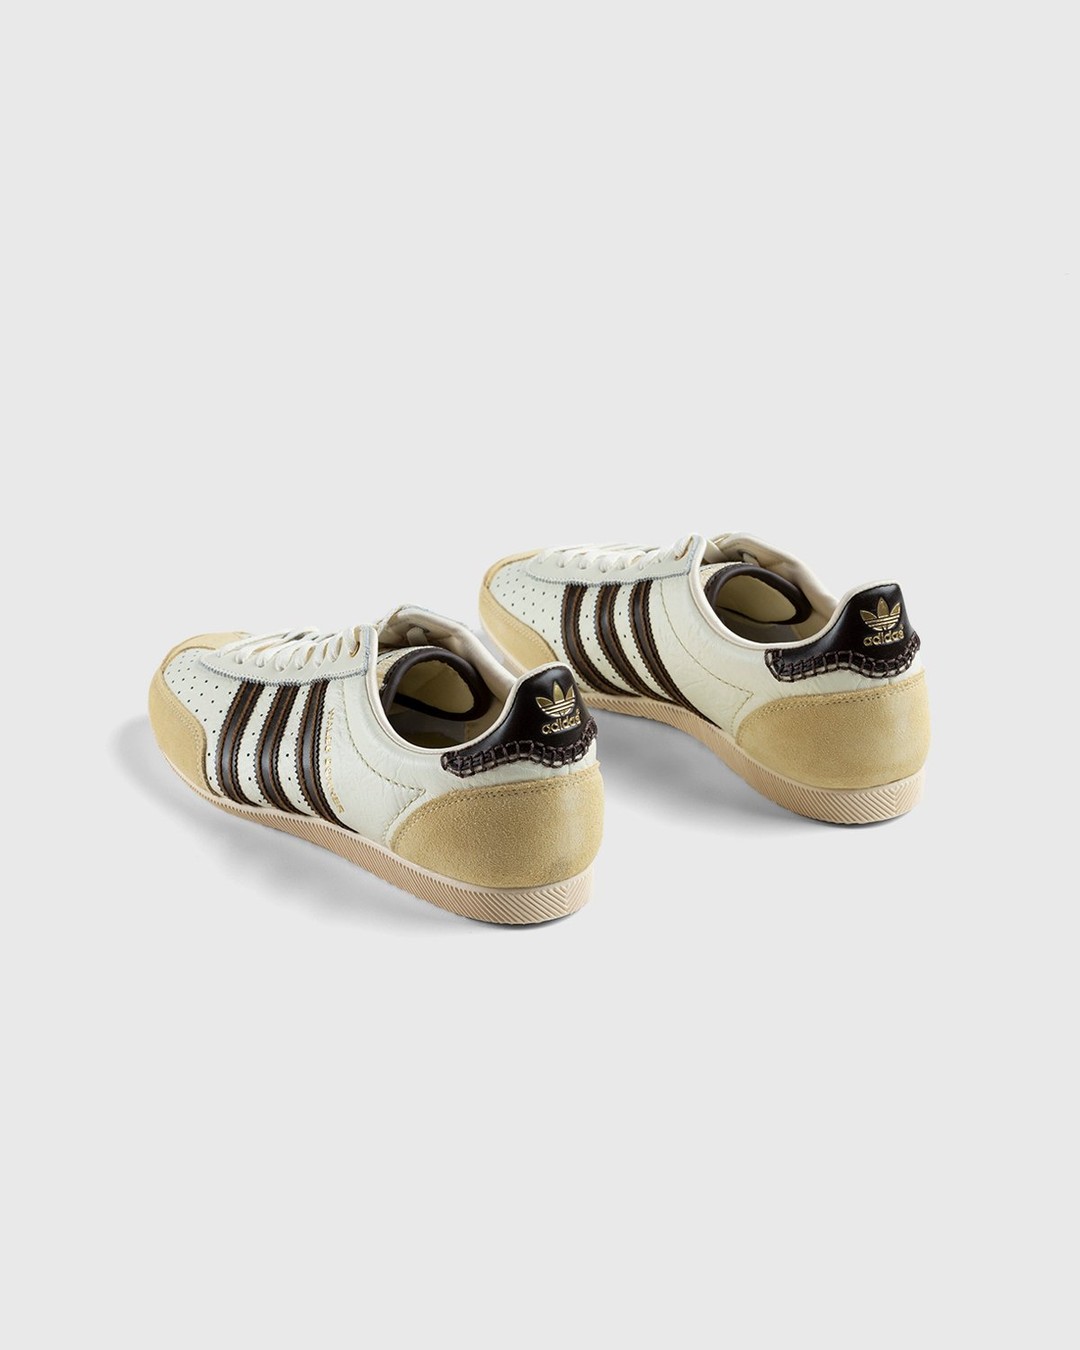 Adidas x Wales Bonner – Japan Cream White/Easy Yellow/Dark Brown - Low Top Sneakers - White - Image 4